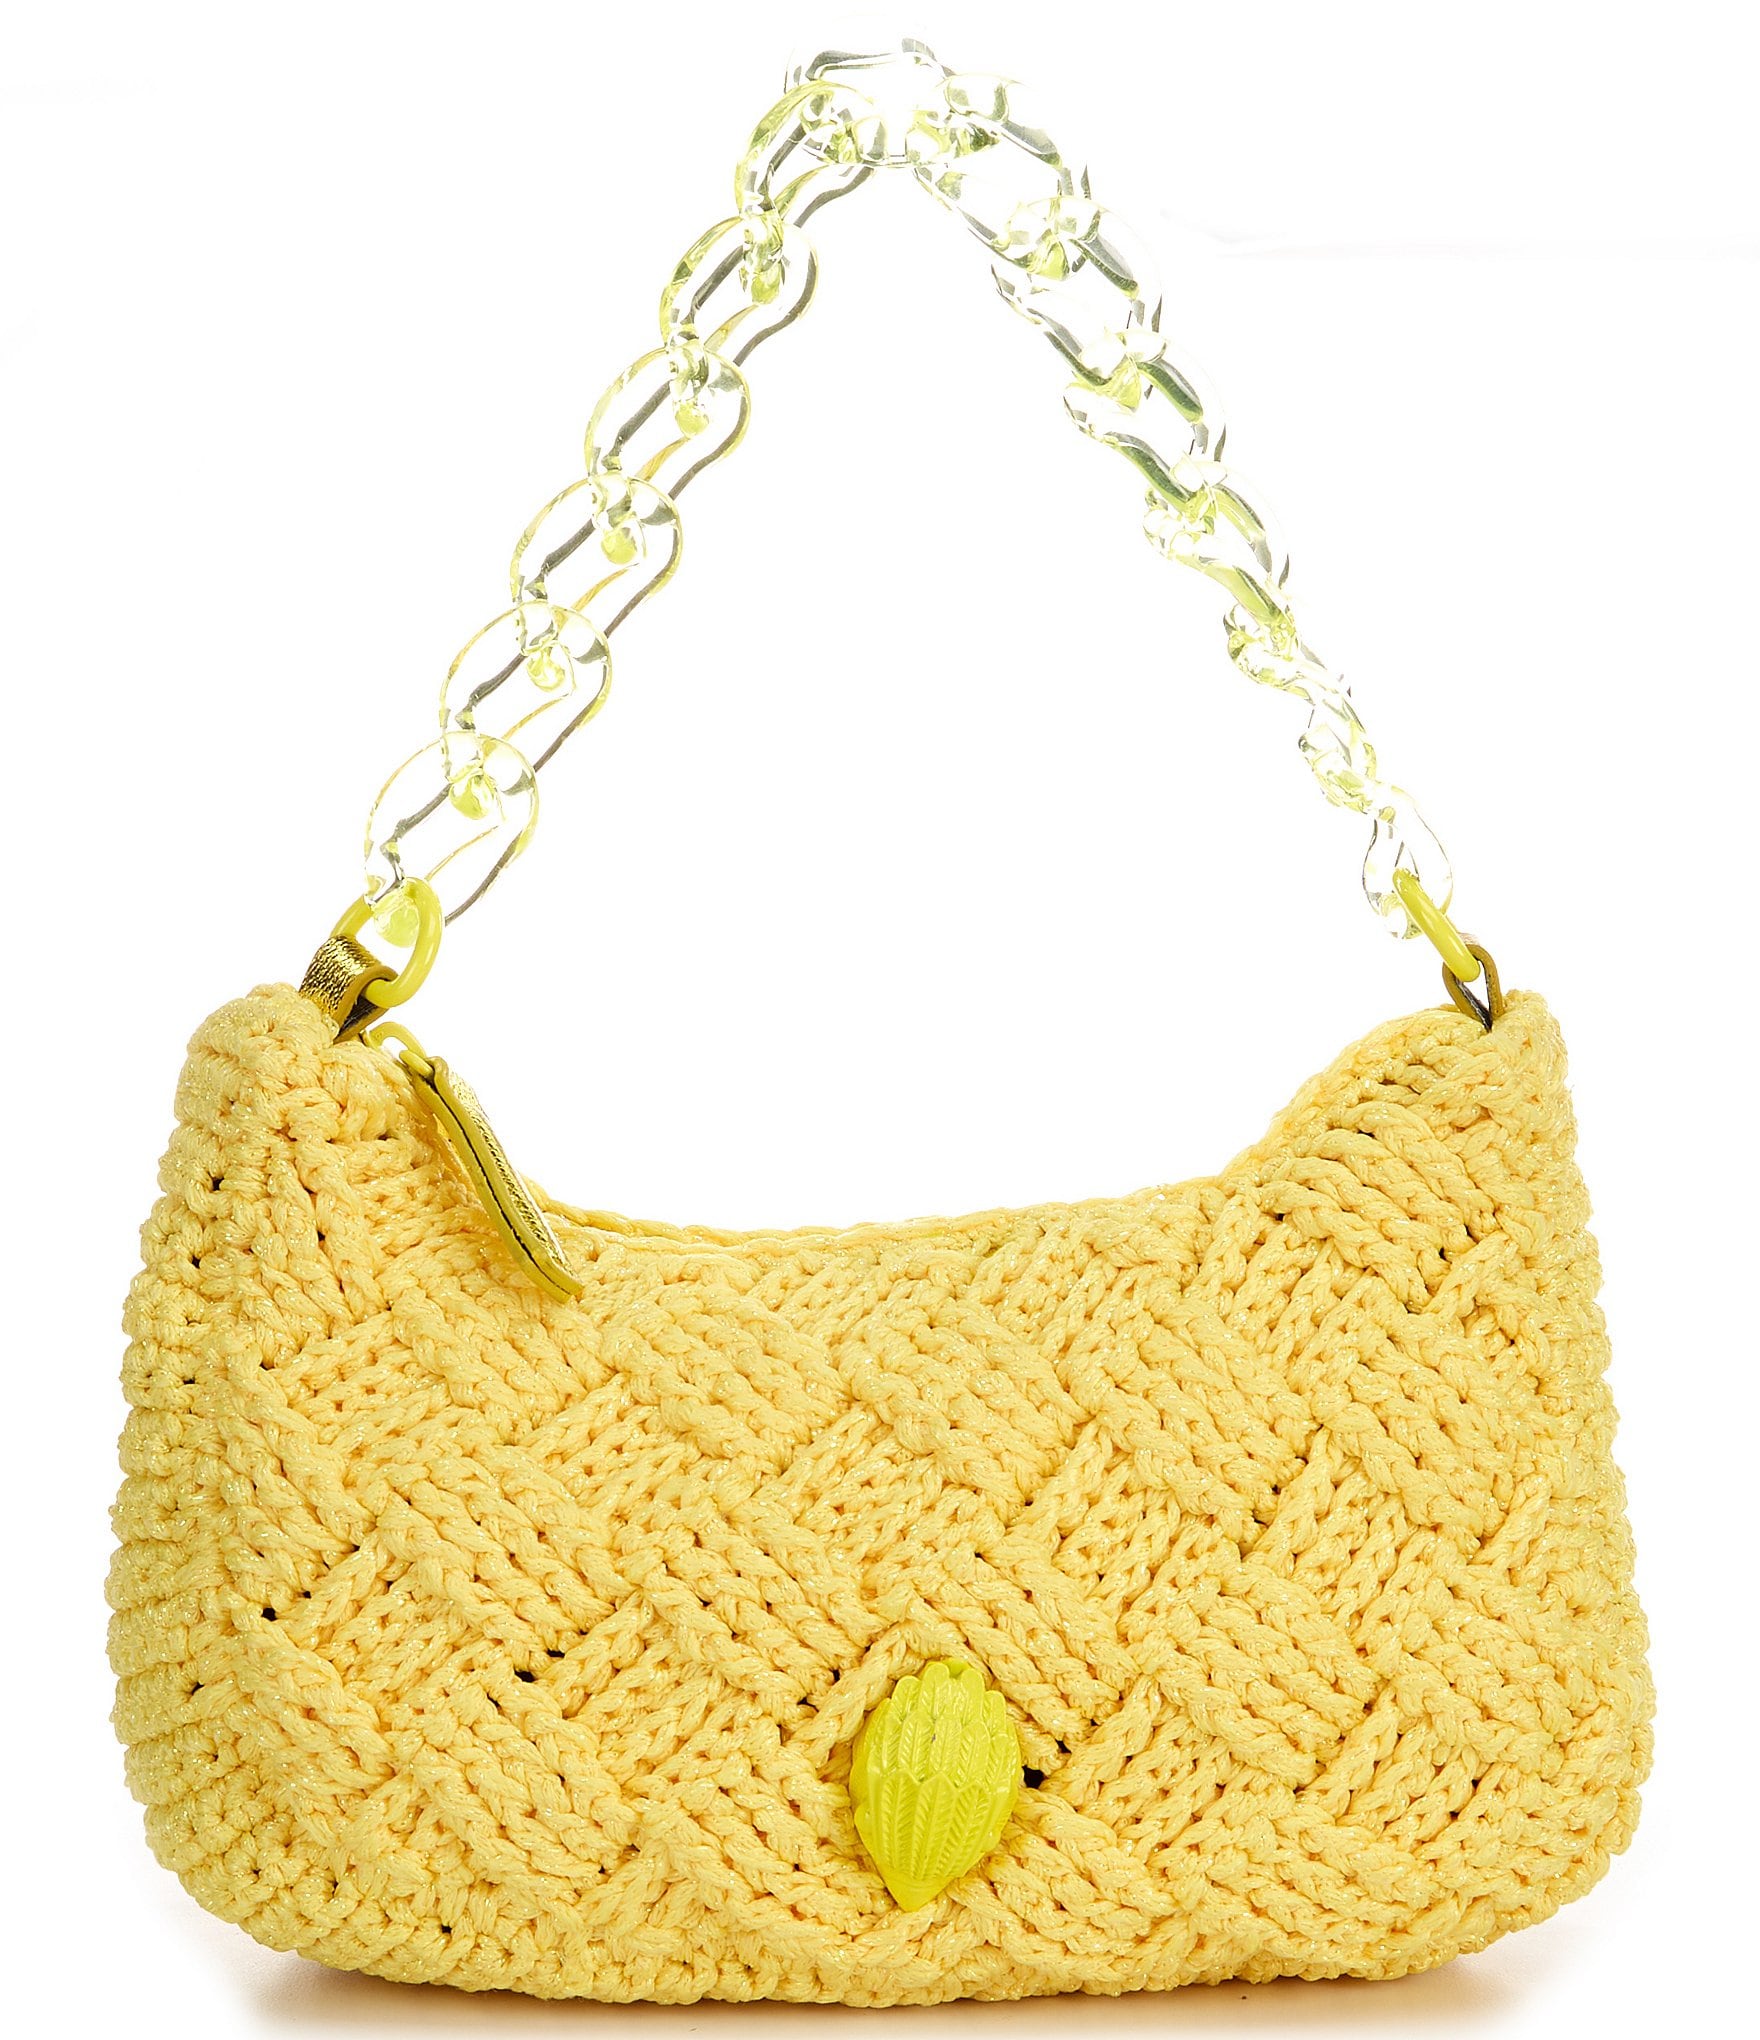 Dillards handbags - Lemon8 Search